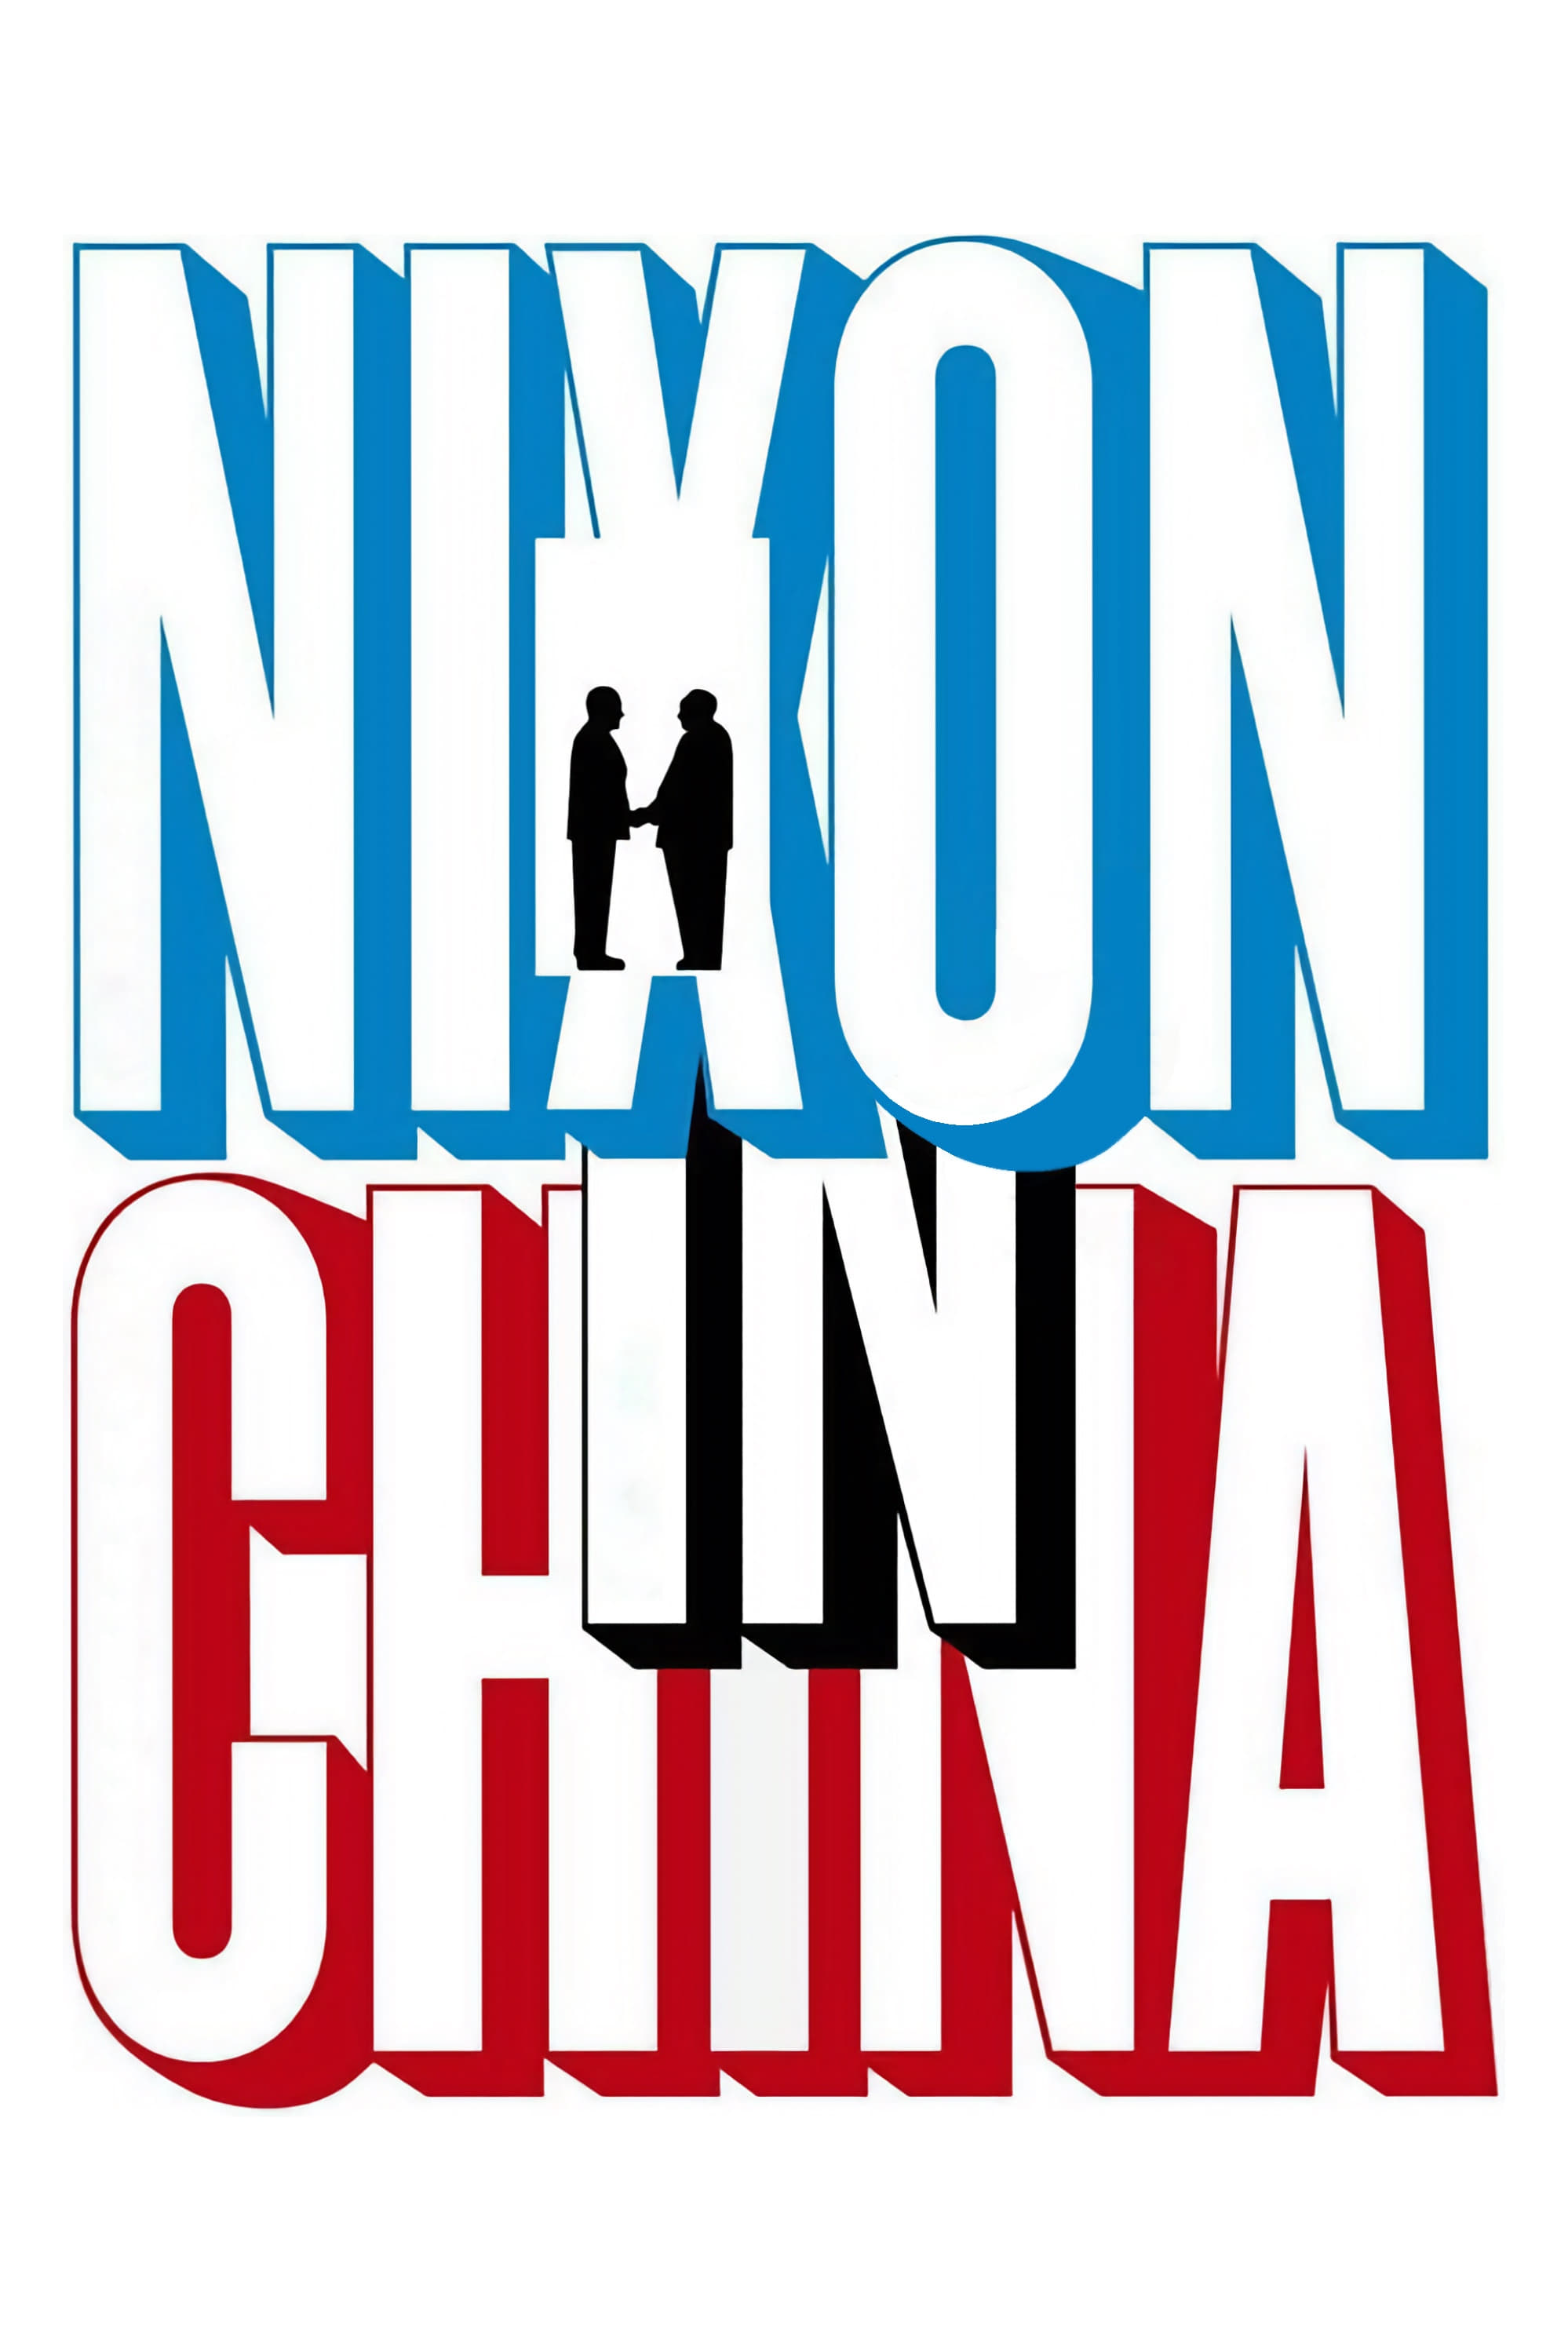 John Adams: Nixon in China